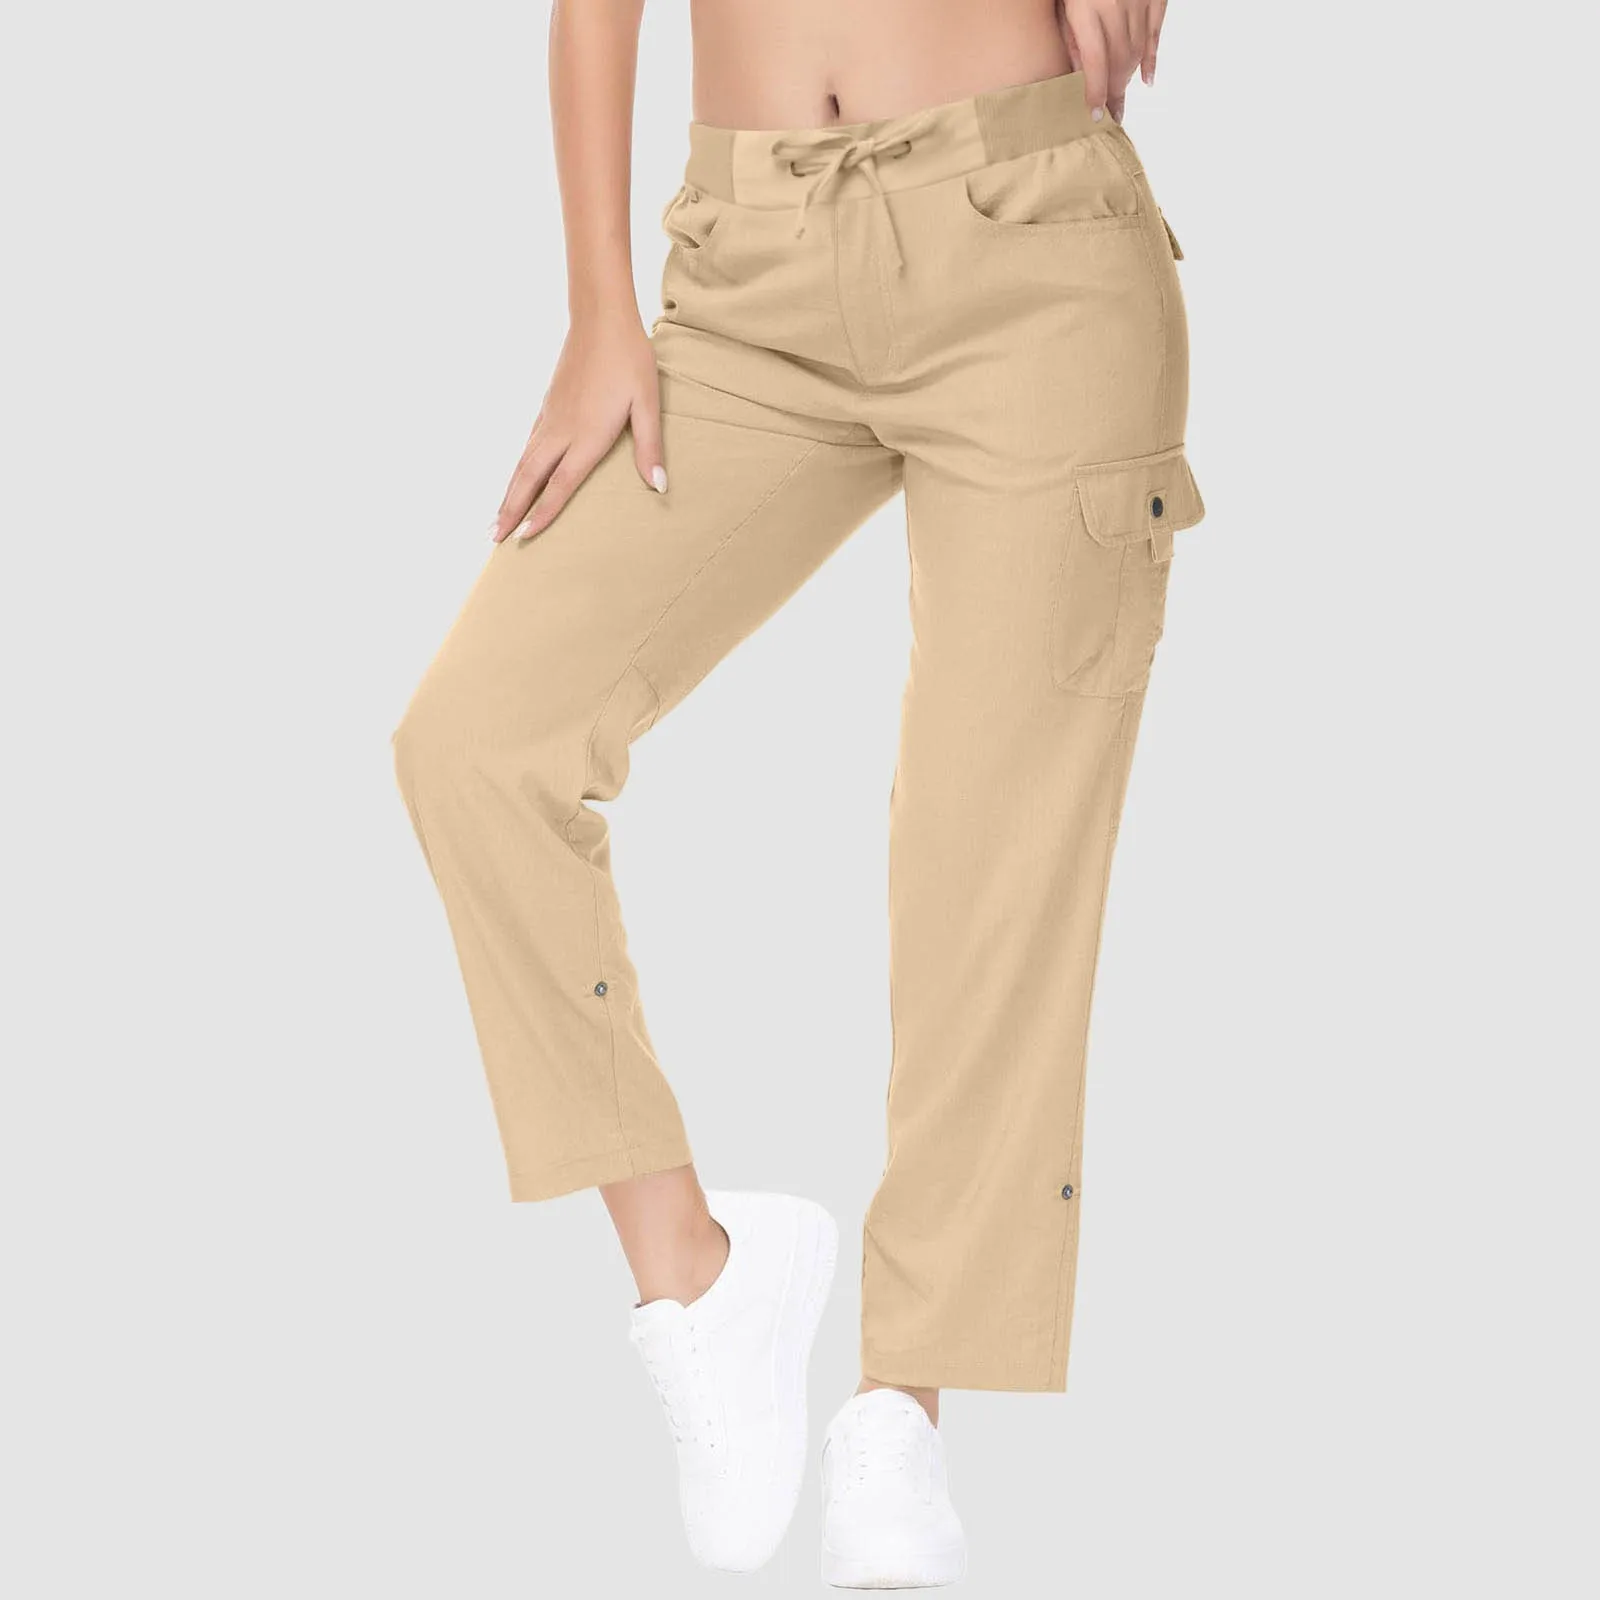 

Women New Cargo Pants Solid Color Casual Elastic Waist Capri Pants Fashion Streetwear Sports Trousers Pockets Work Pant